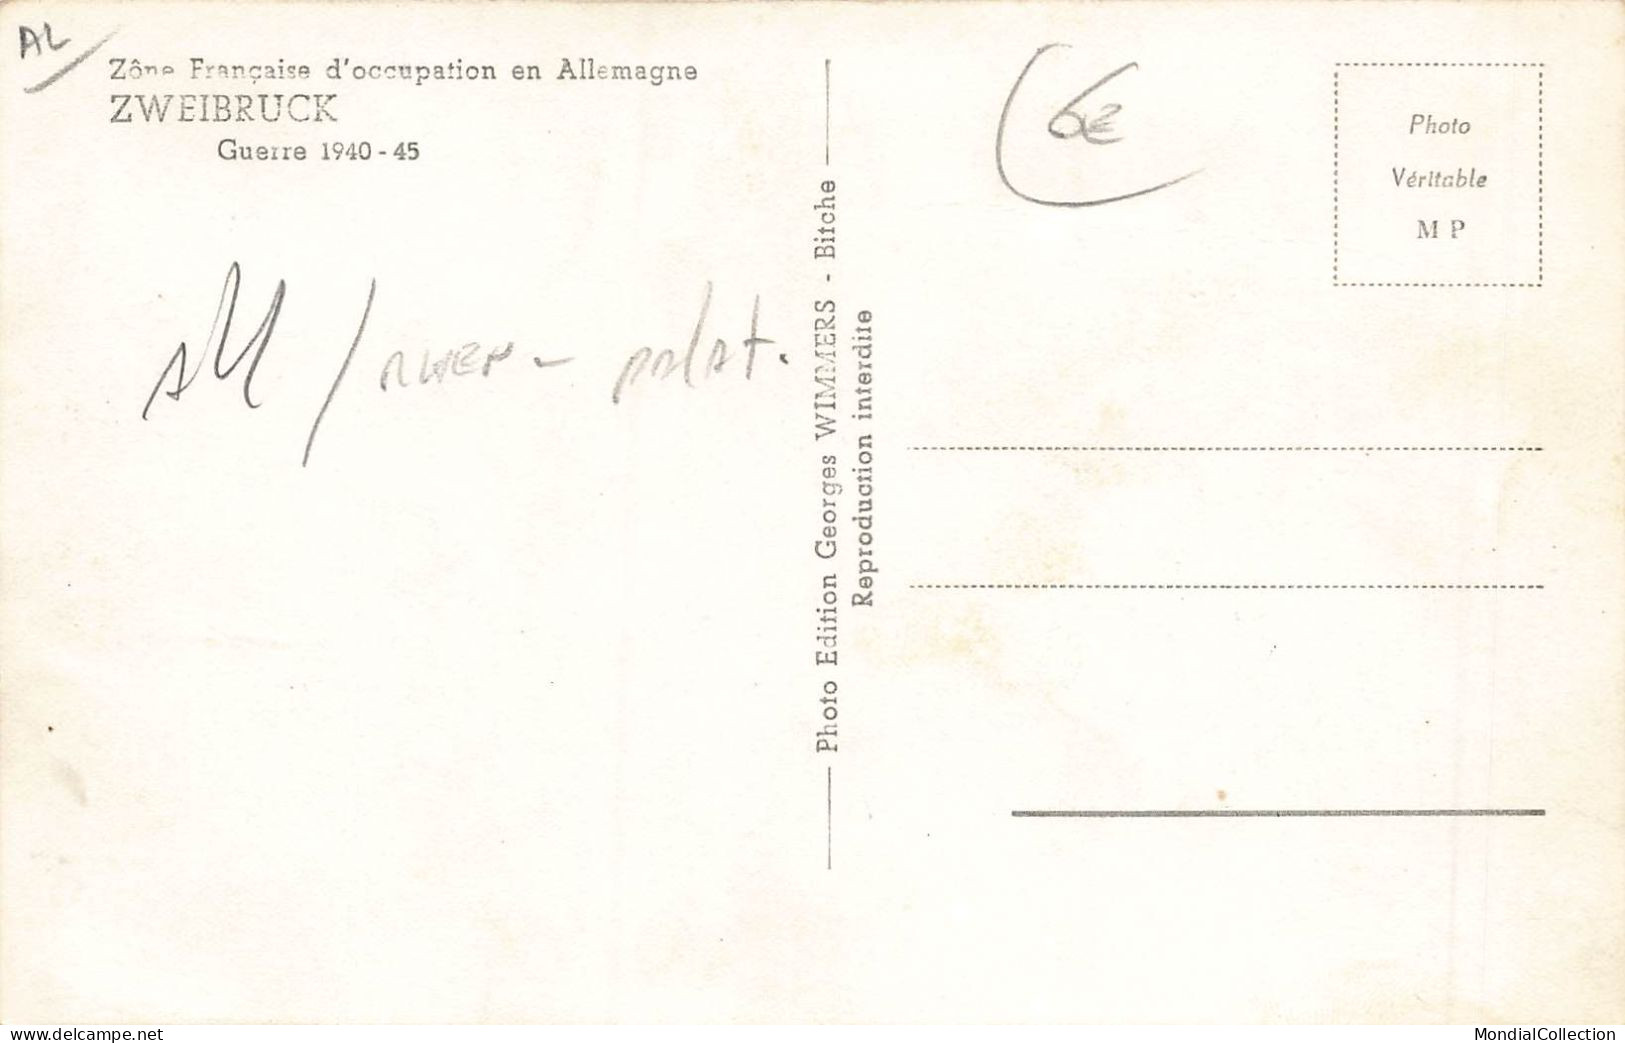 MIKIBP11-013- ALLEMAGNE ZWEIBRUCK ZONE FRANCAISE D OCCUPATION EN ALLEMAGNE GUERRE 1940-1945 - Zweibrücken